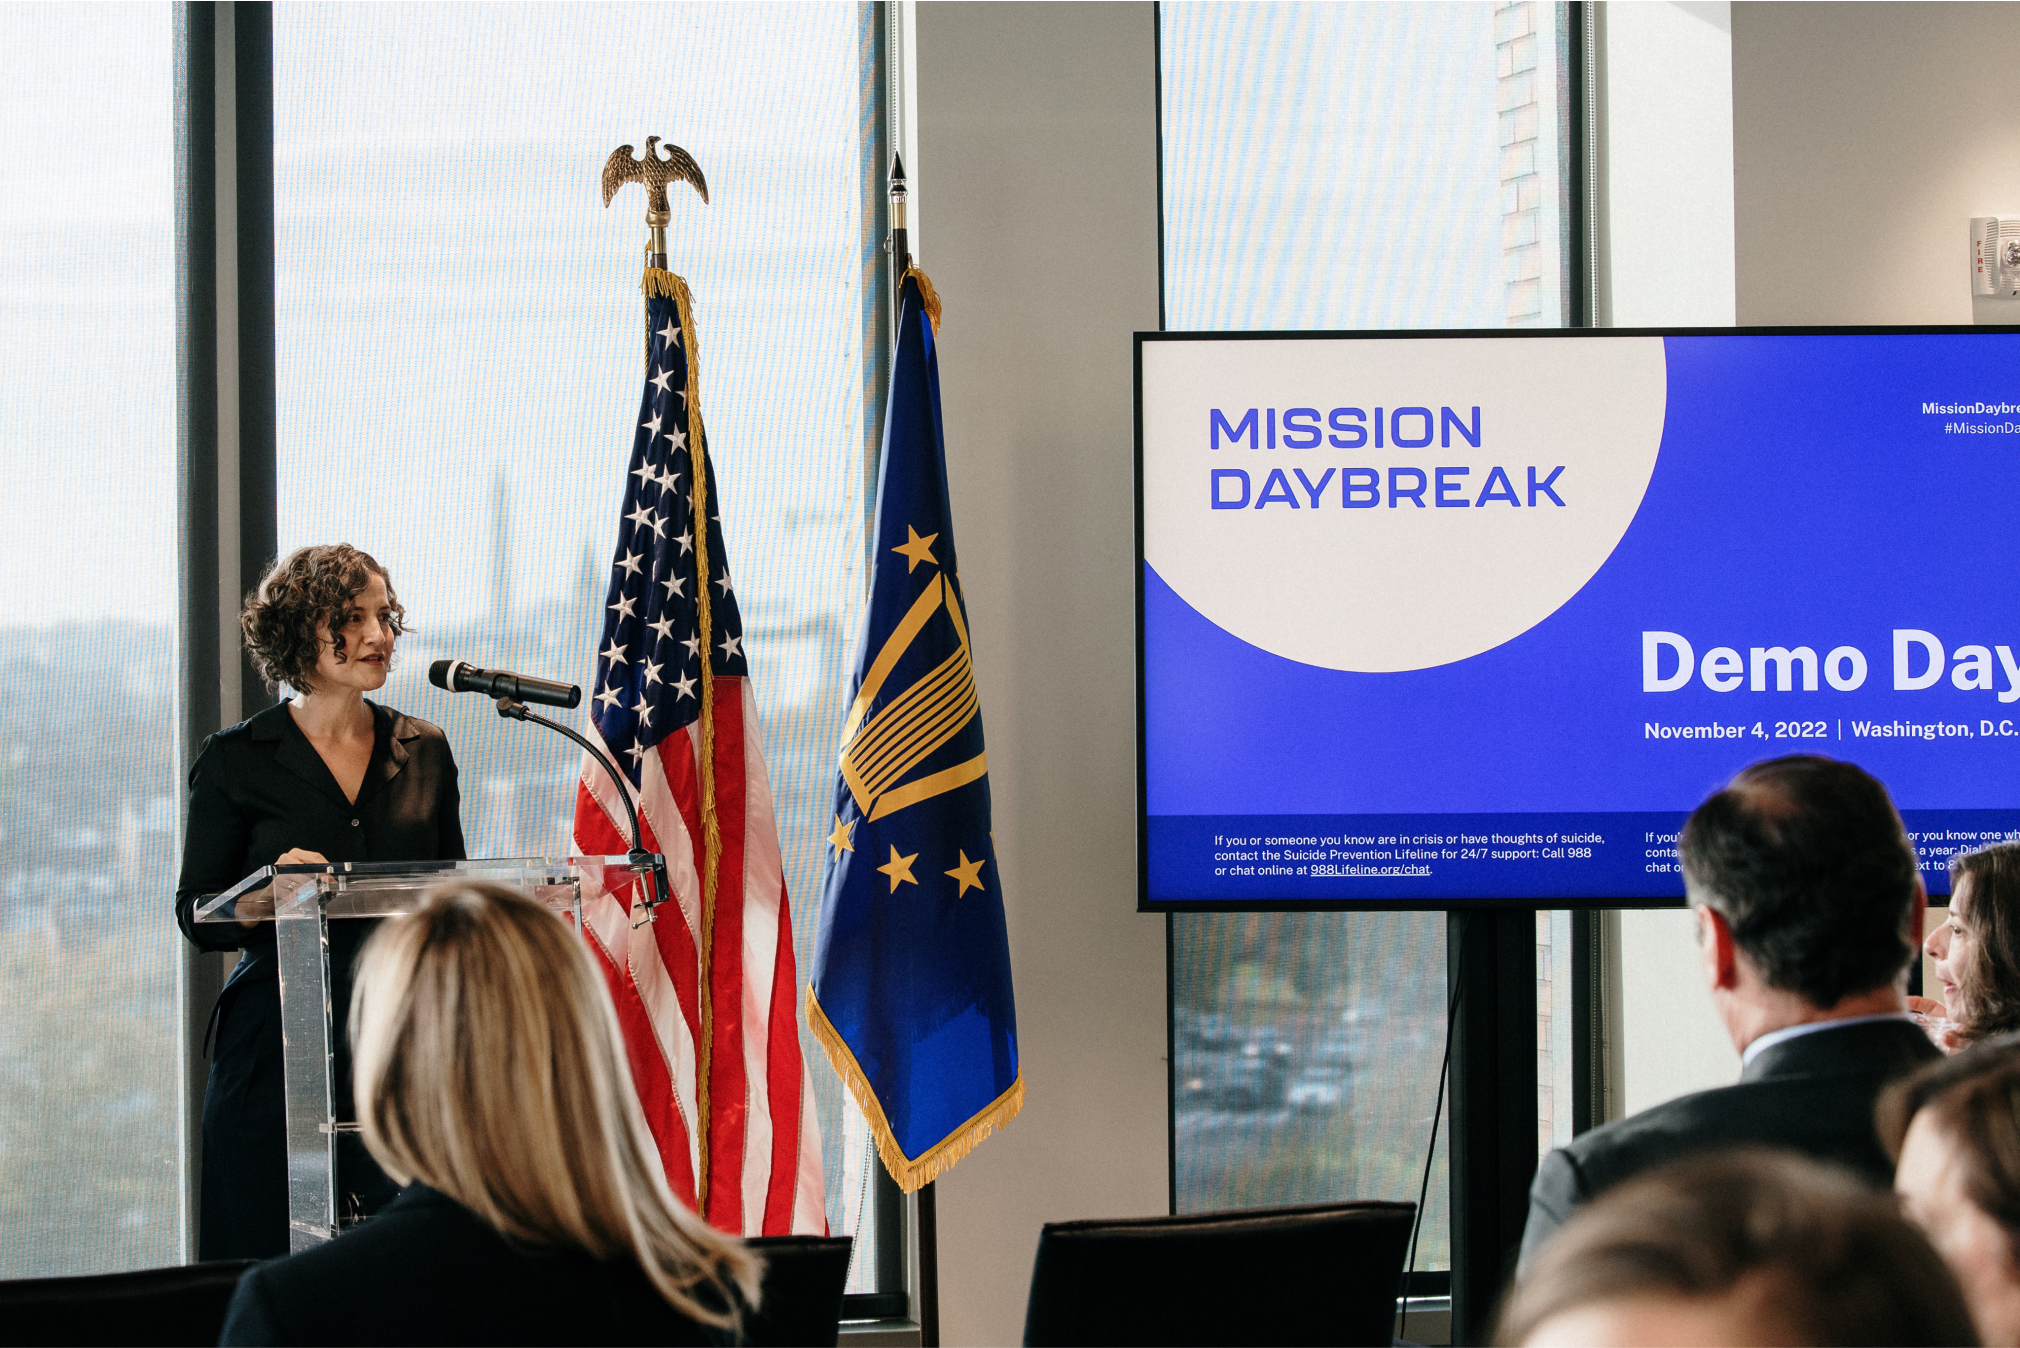 Mission Daybreak awards $11.5 million to Phase 2 winners